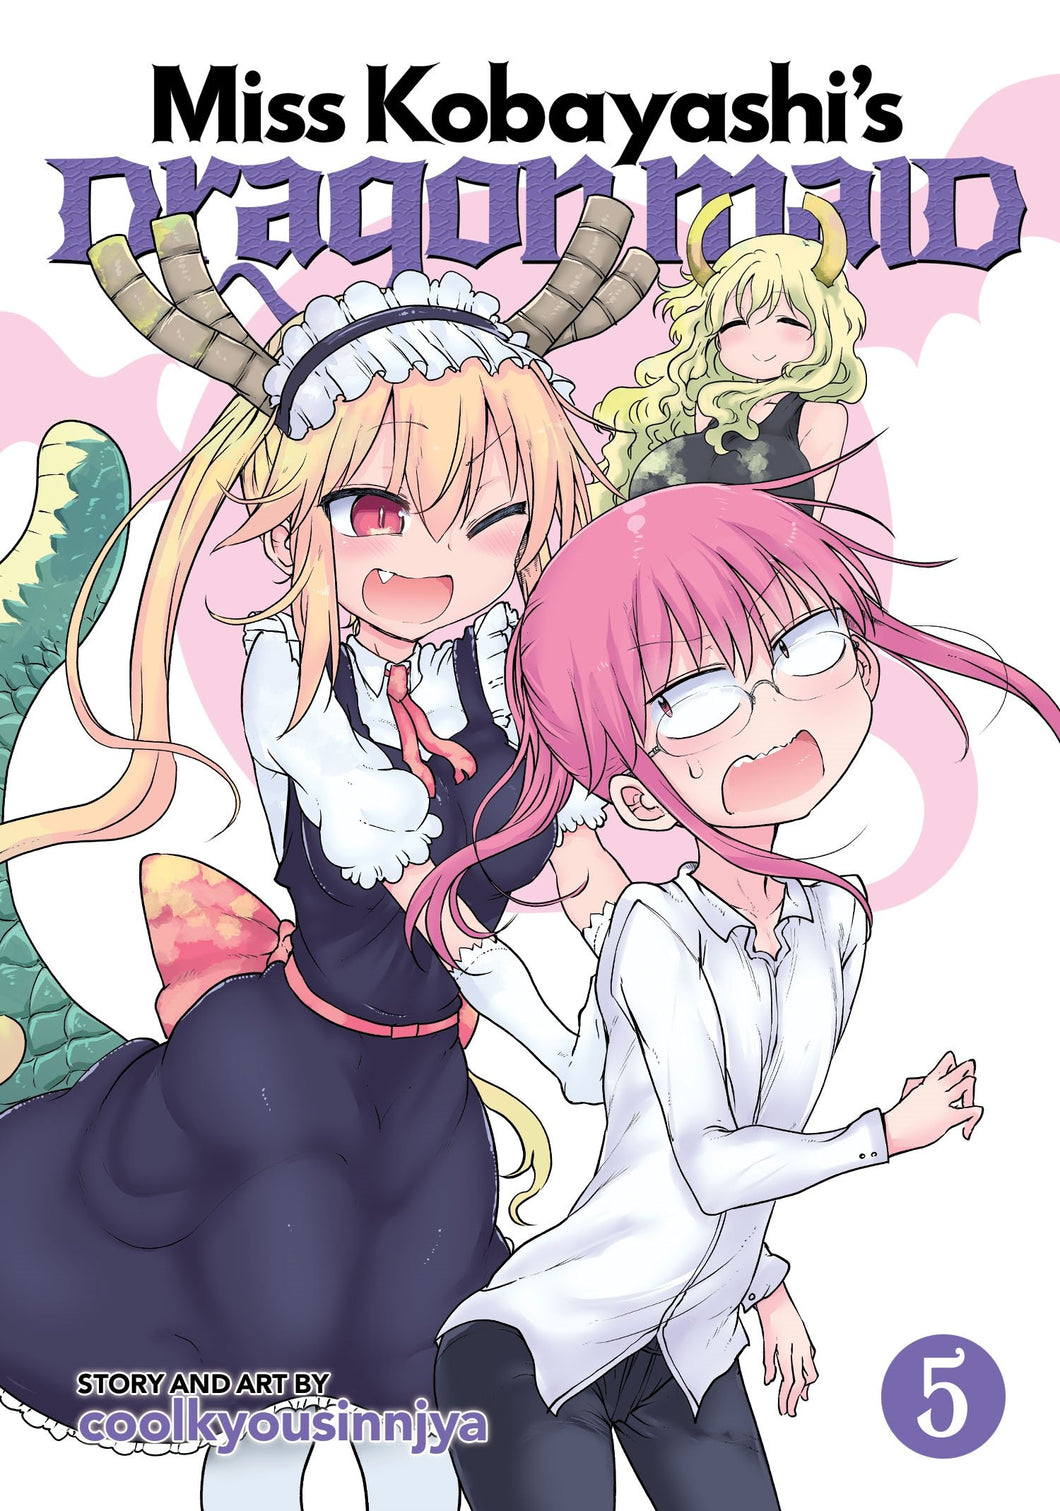 Miss Kobayashi's Dragon Maid Volume 5